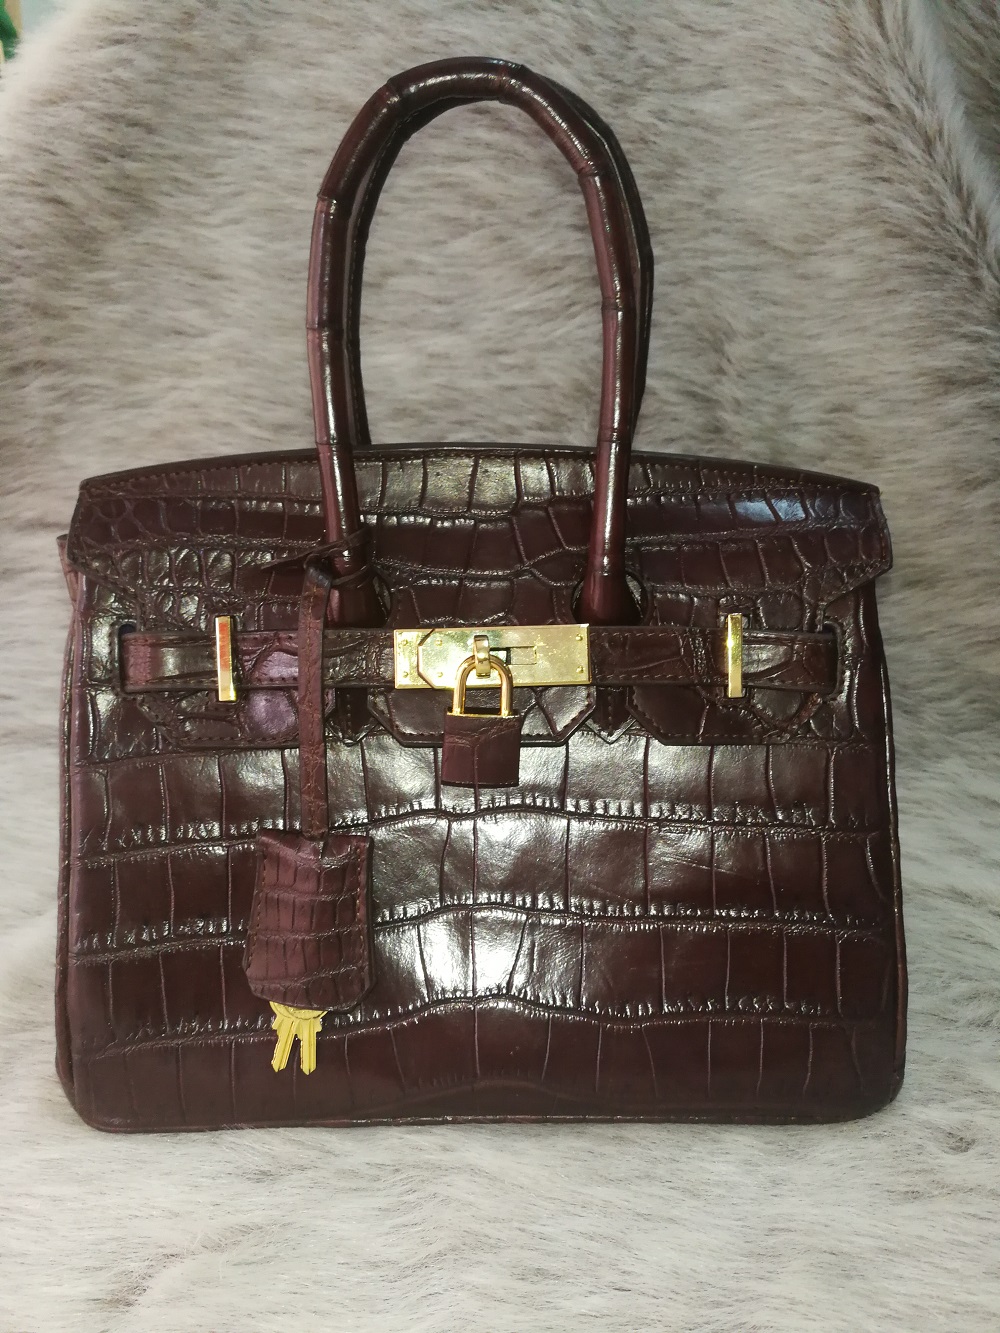 Luxury Genuine Crocodile Tote Bag/Handbag in Chocolate Brown Crocodile Skin #CRW214H-BR-25CM